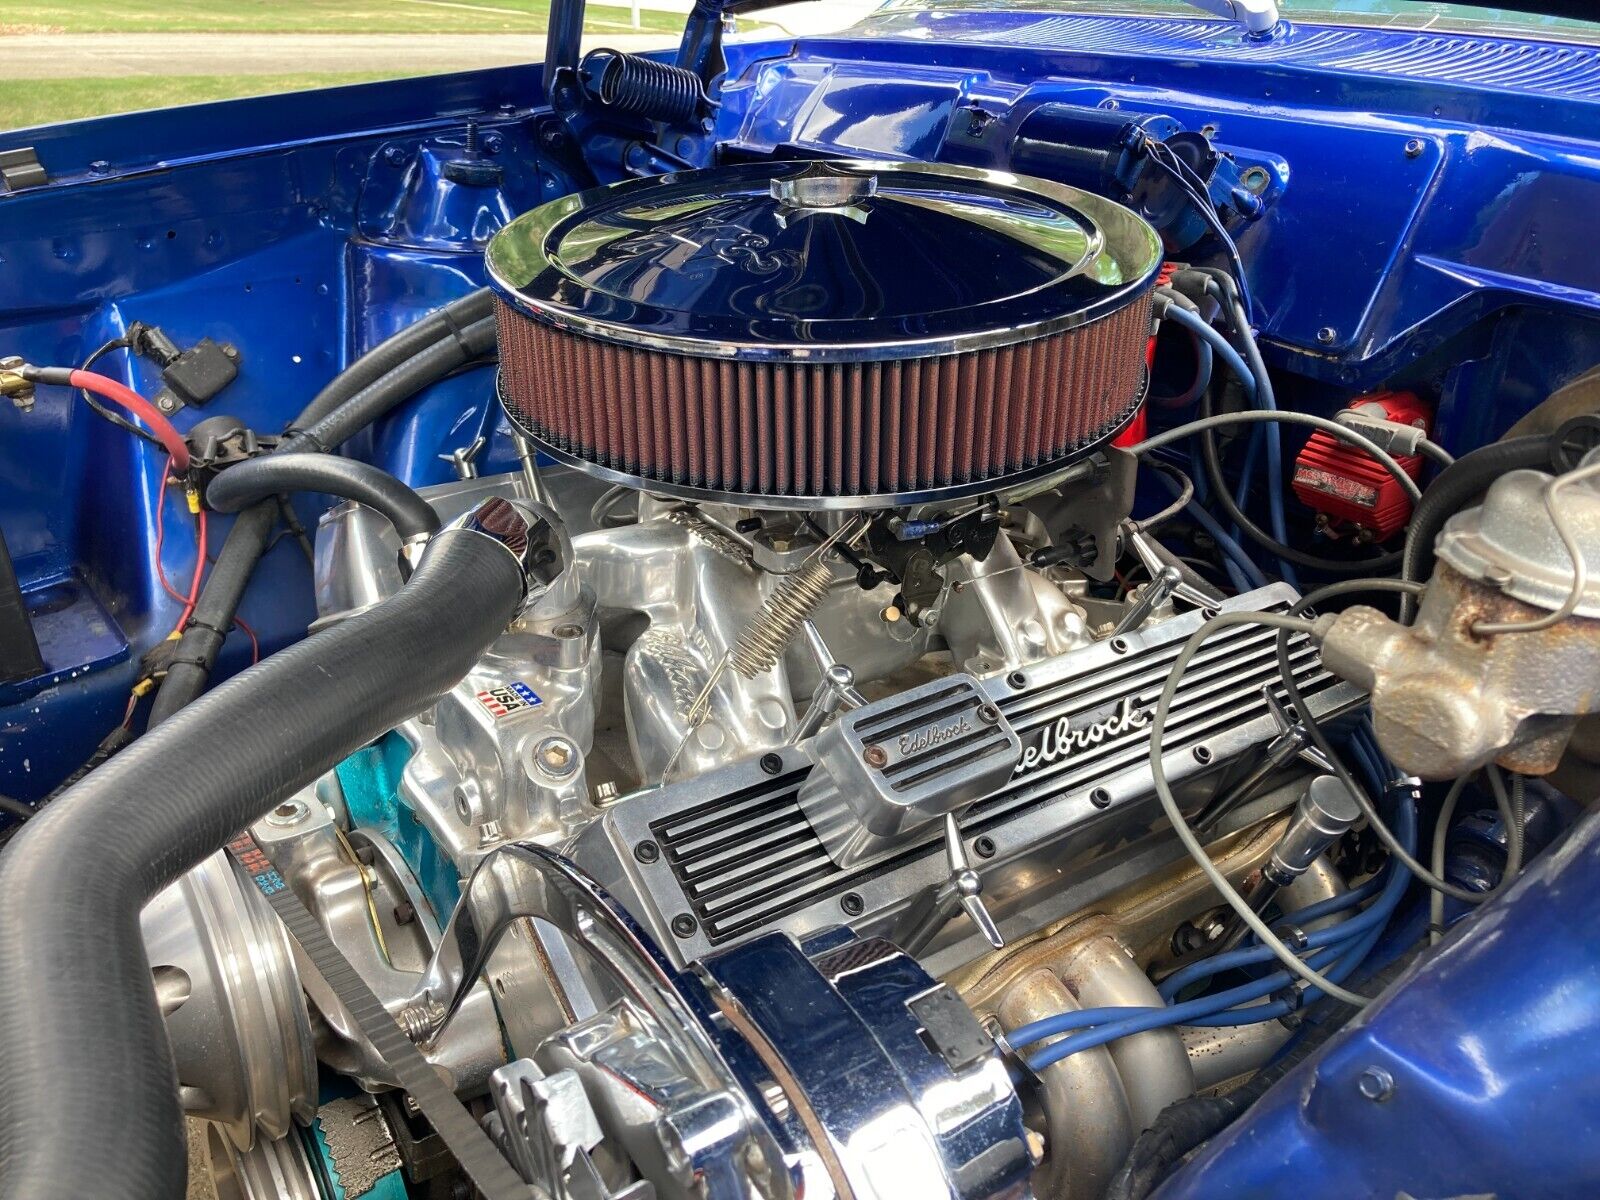 350 cubic inch Chevrolet V8 engine